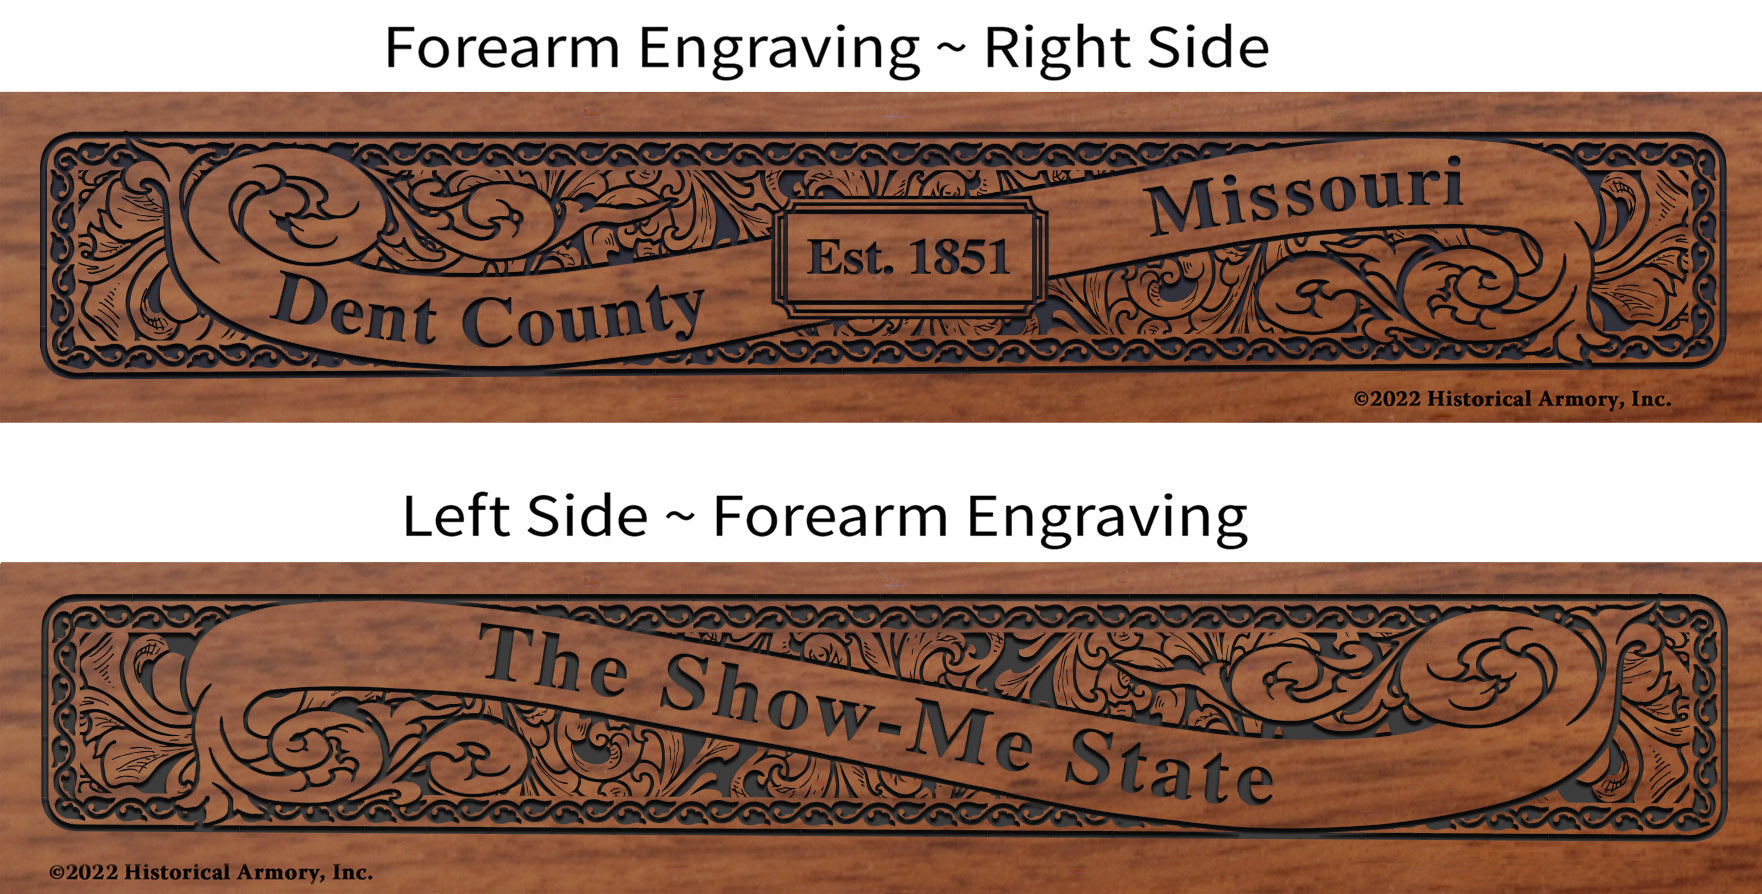 Dent County Missouri Engraved Rifle Forearm